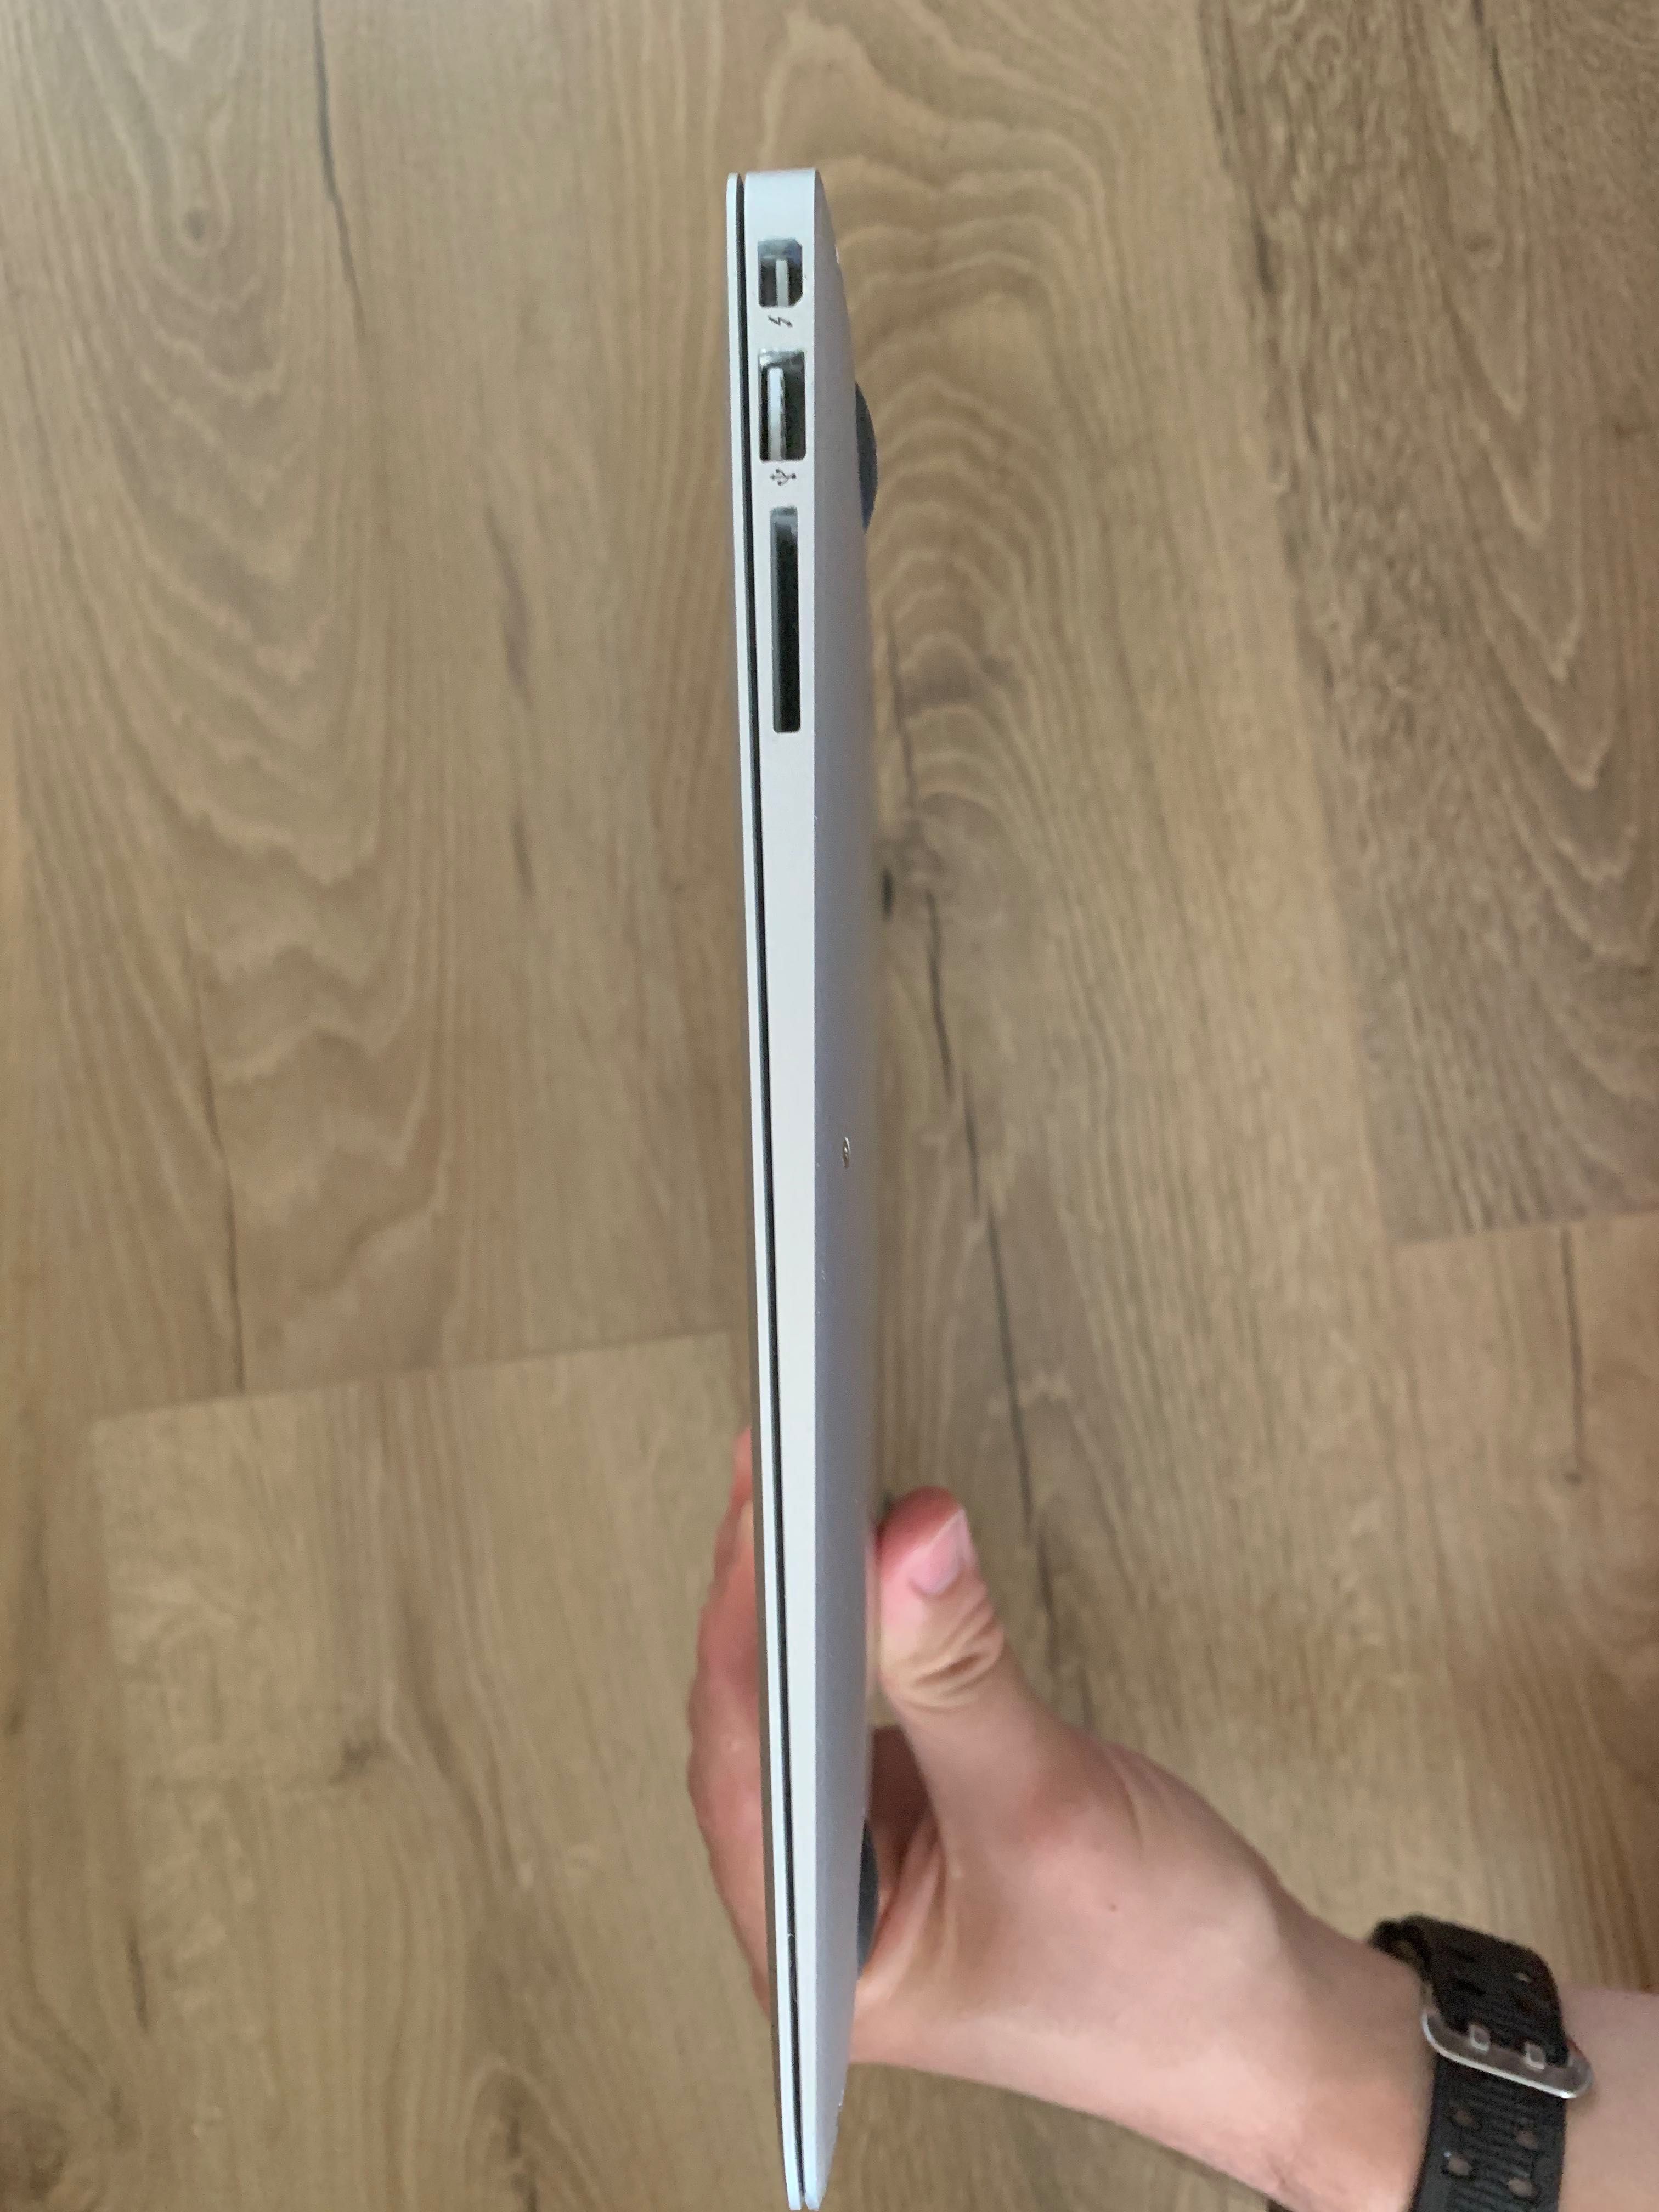 MacBook Air 13-inch, 2017